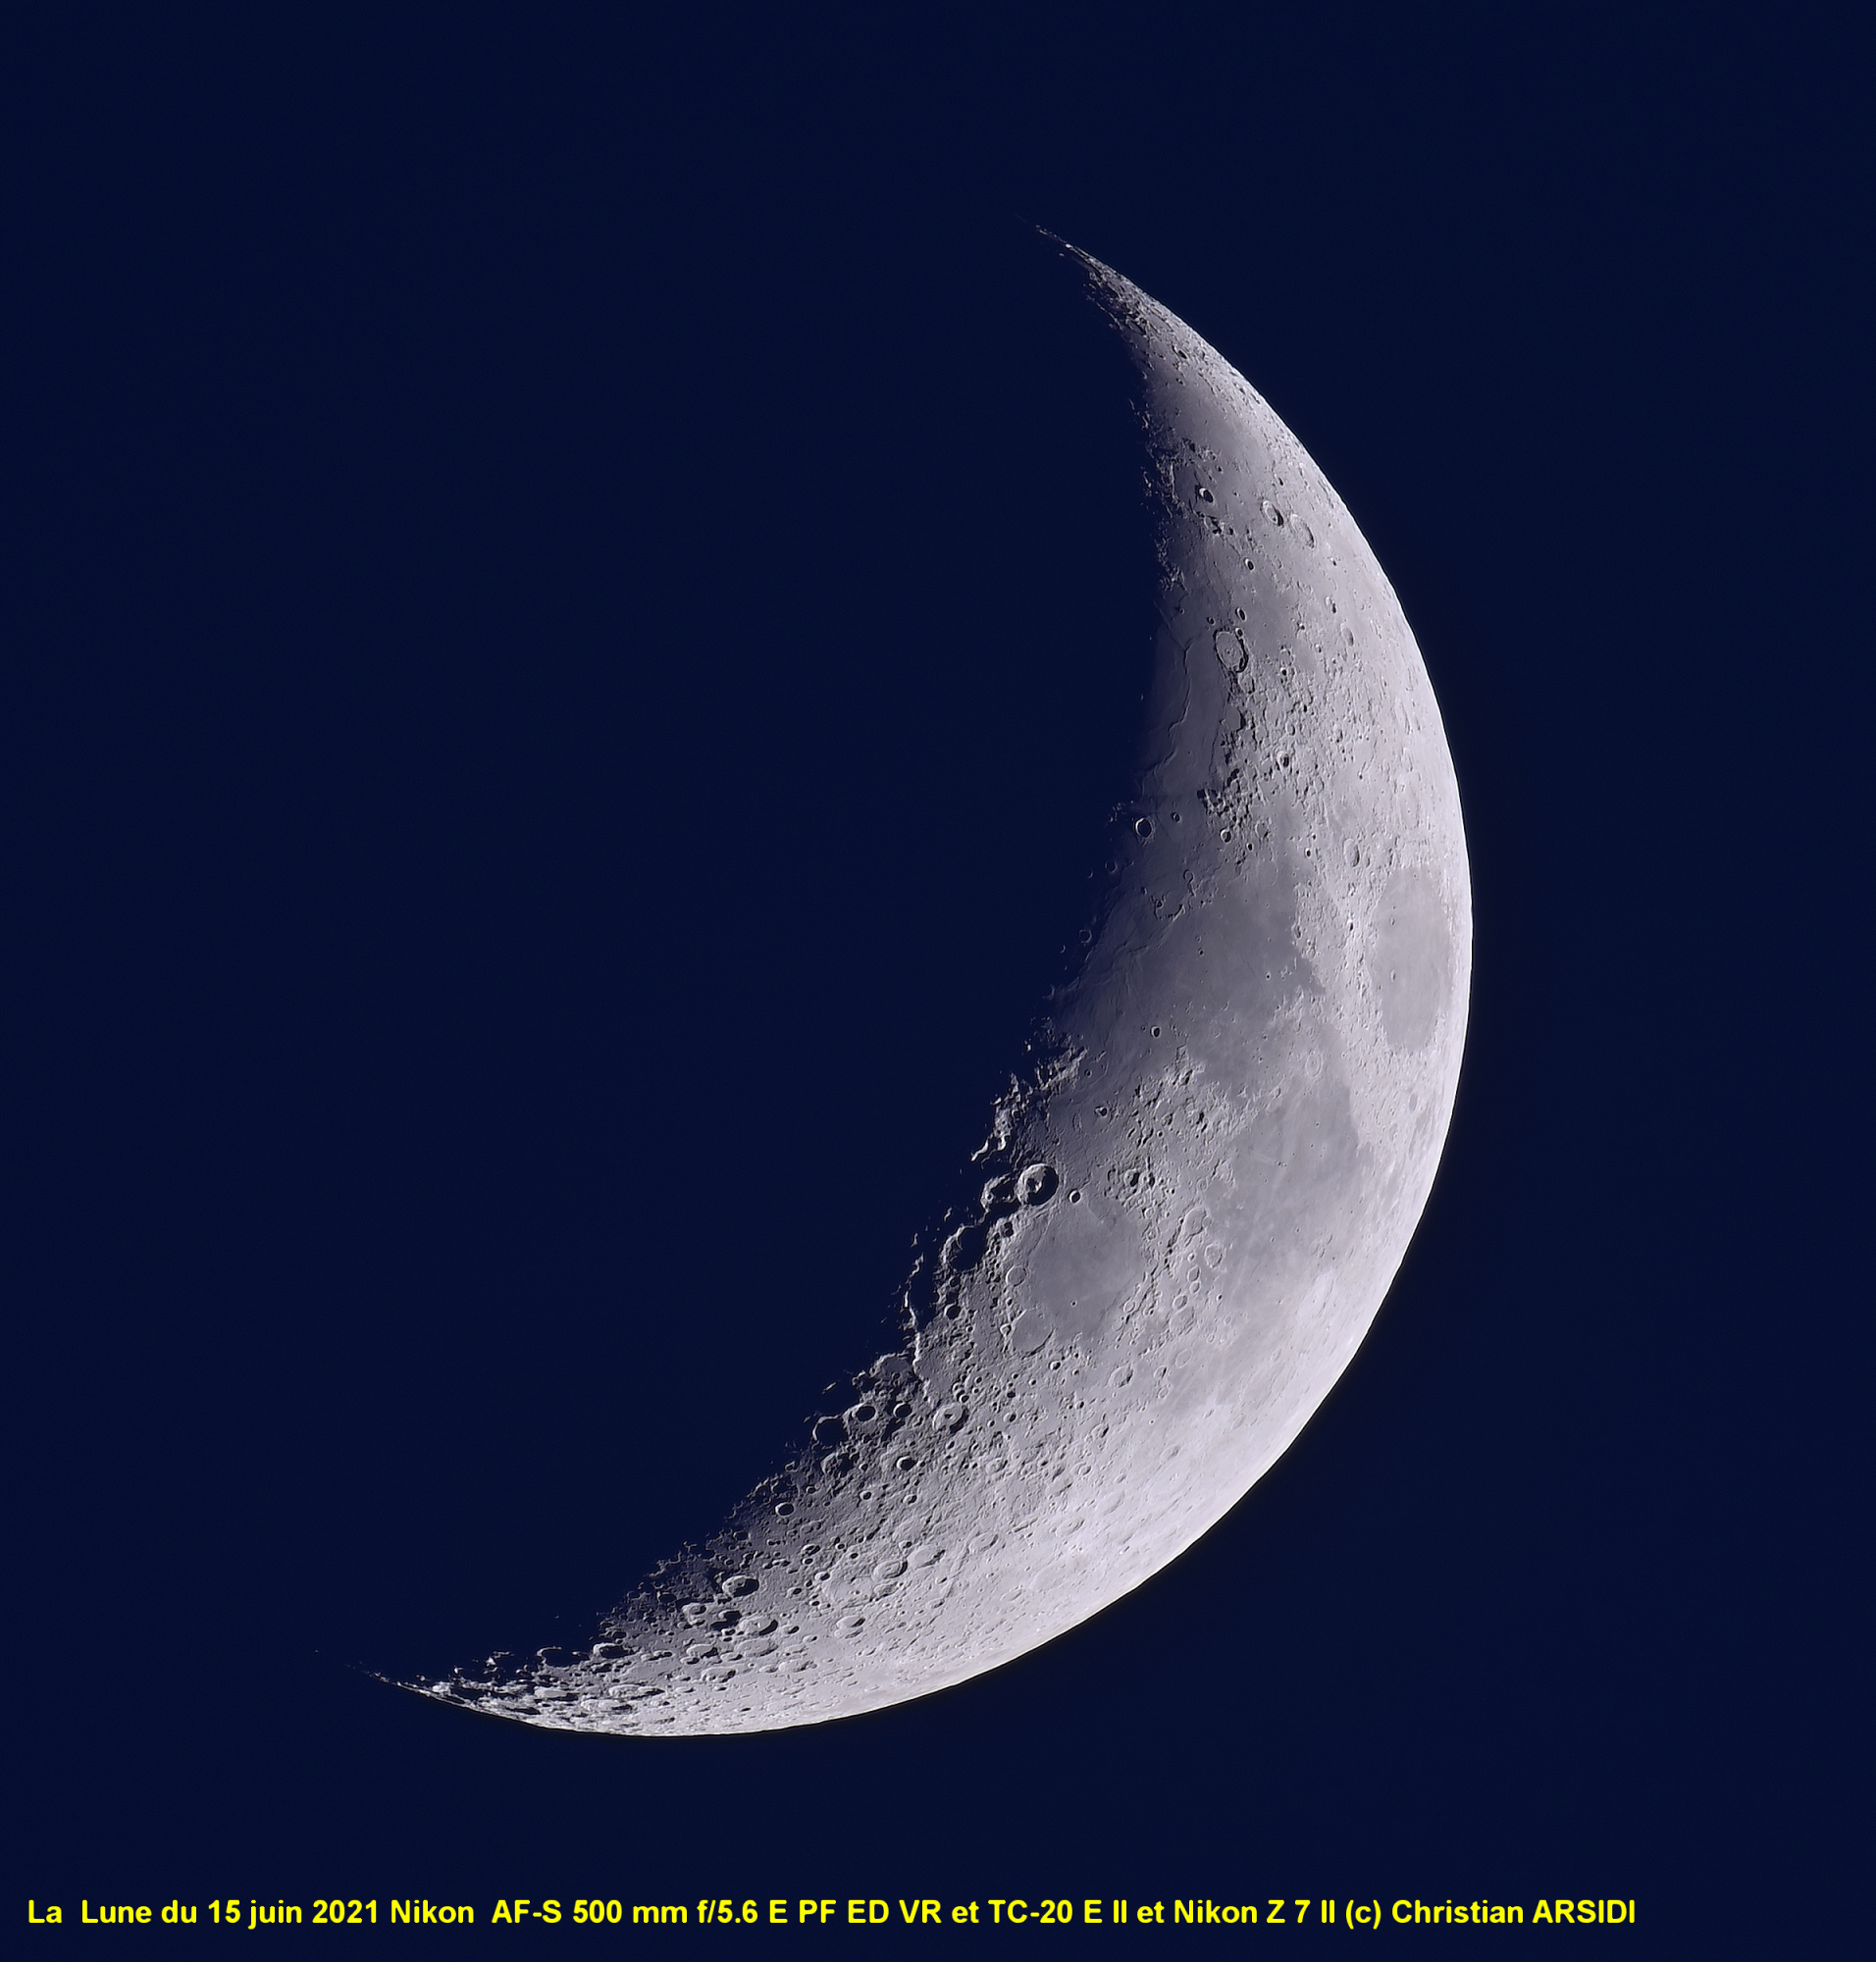 La Lune 30 images TIFF_DxO 1 TTB BV JPEG.jpg